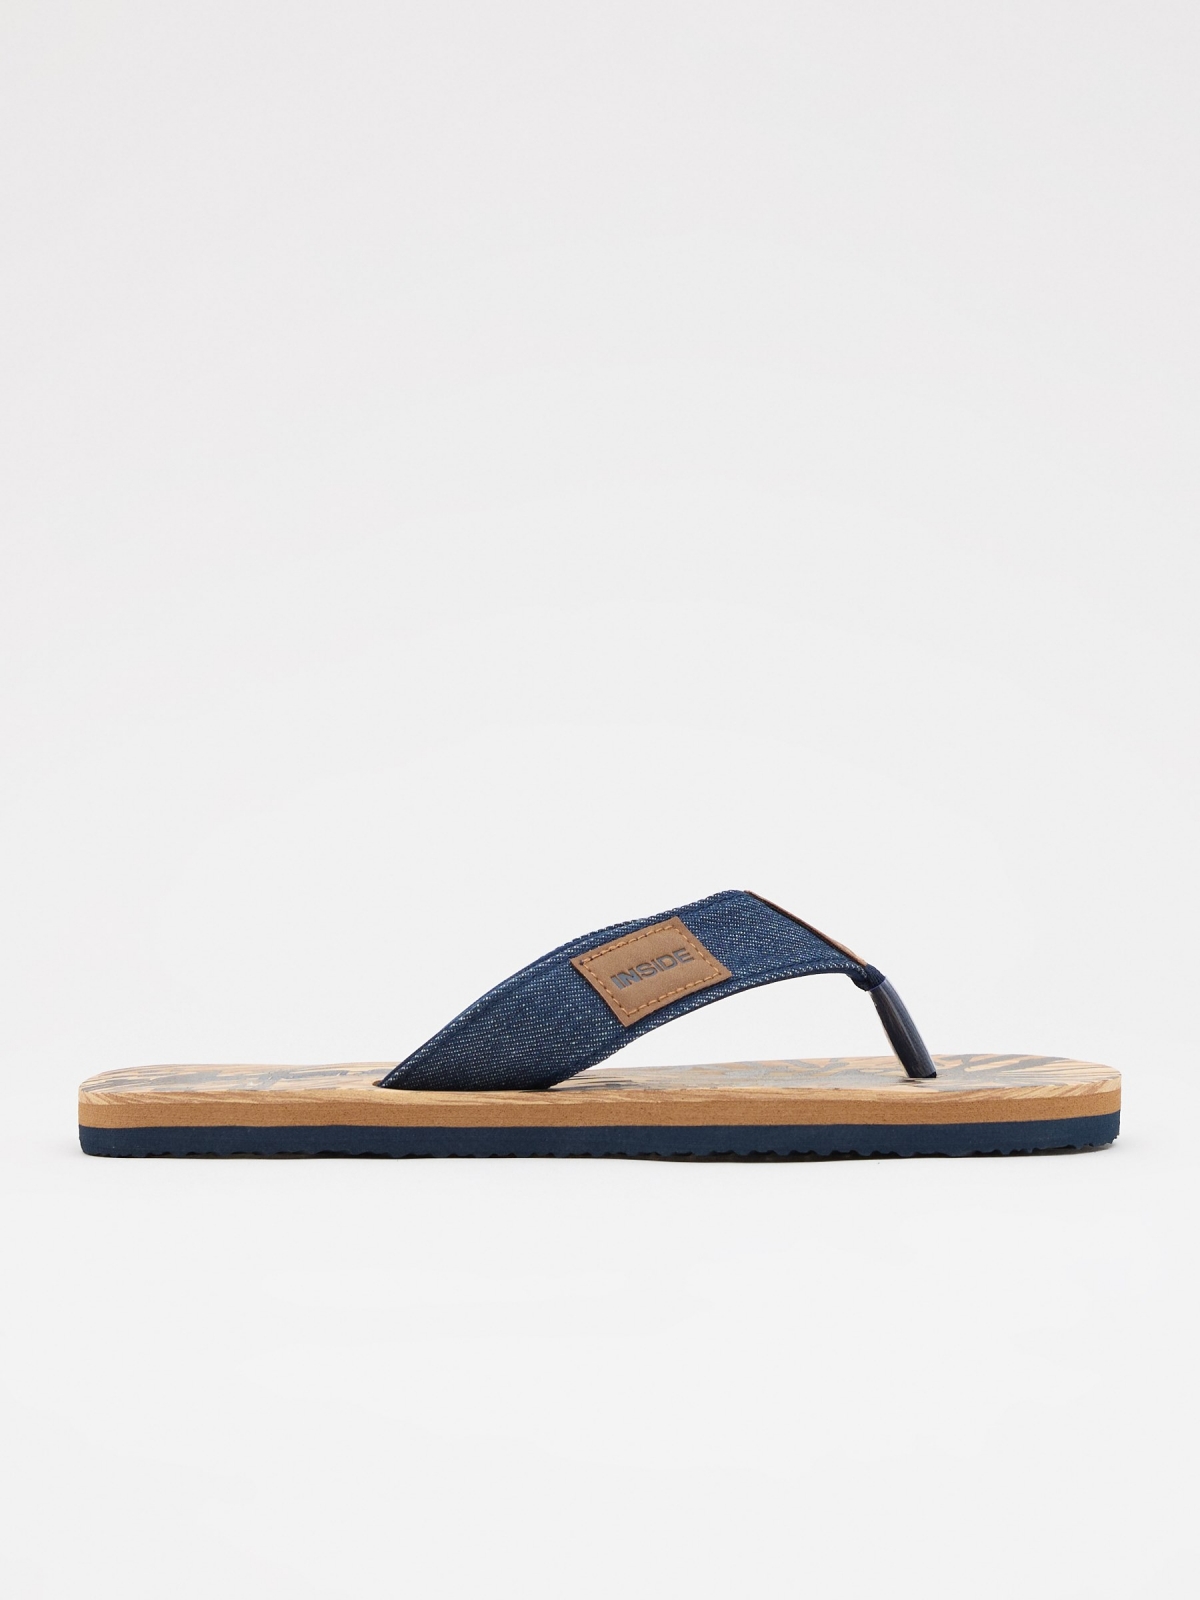 Blue denim thong sandal sand lateral view